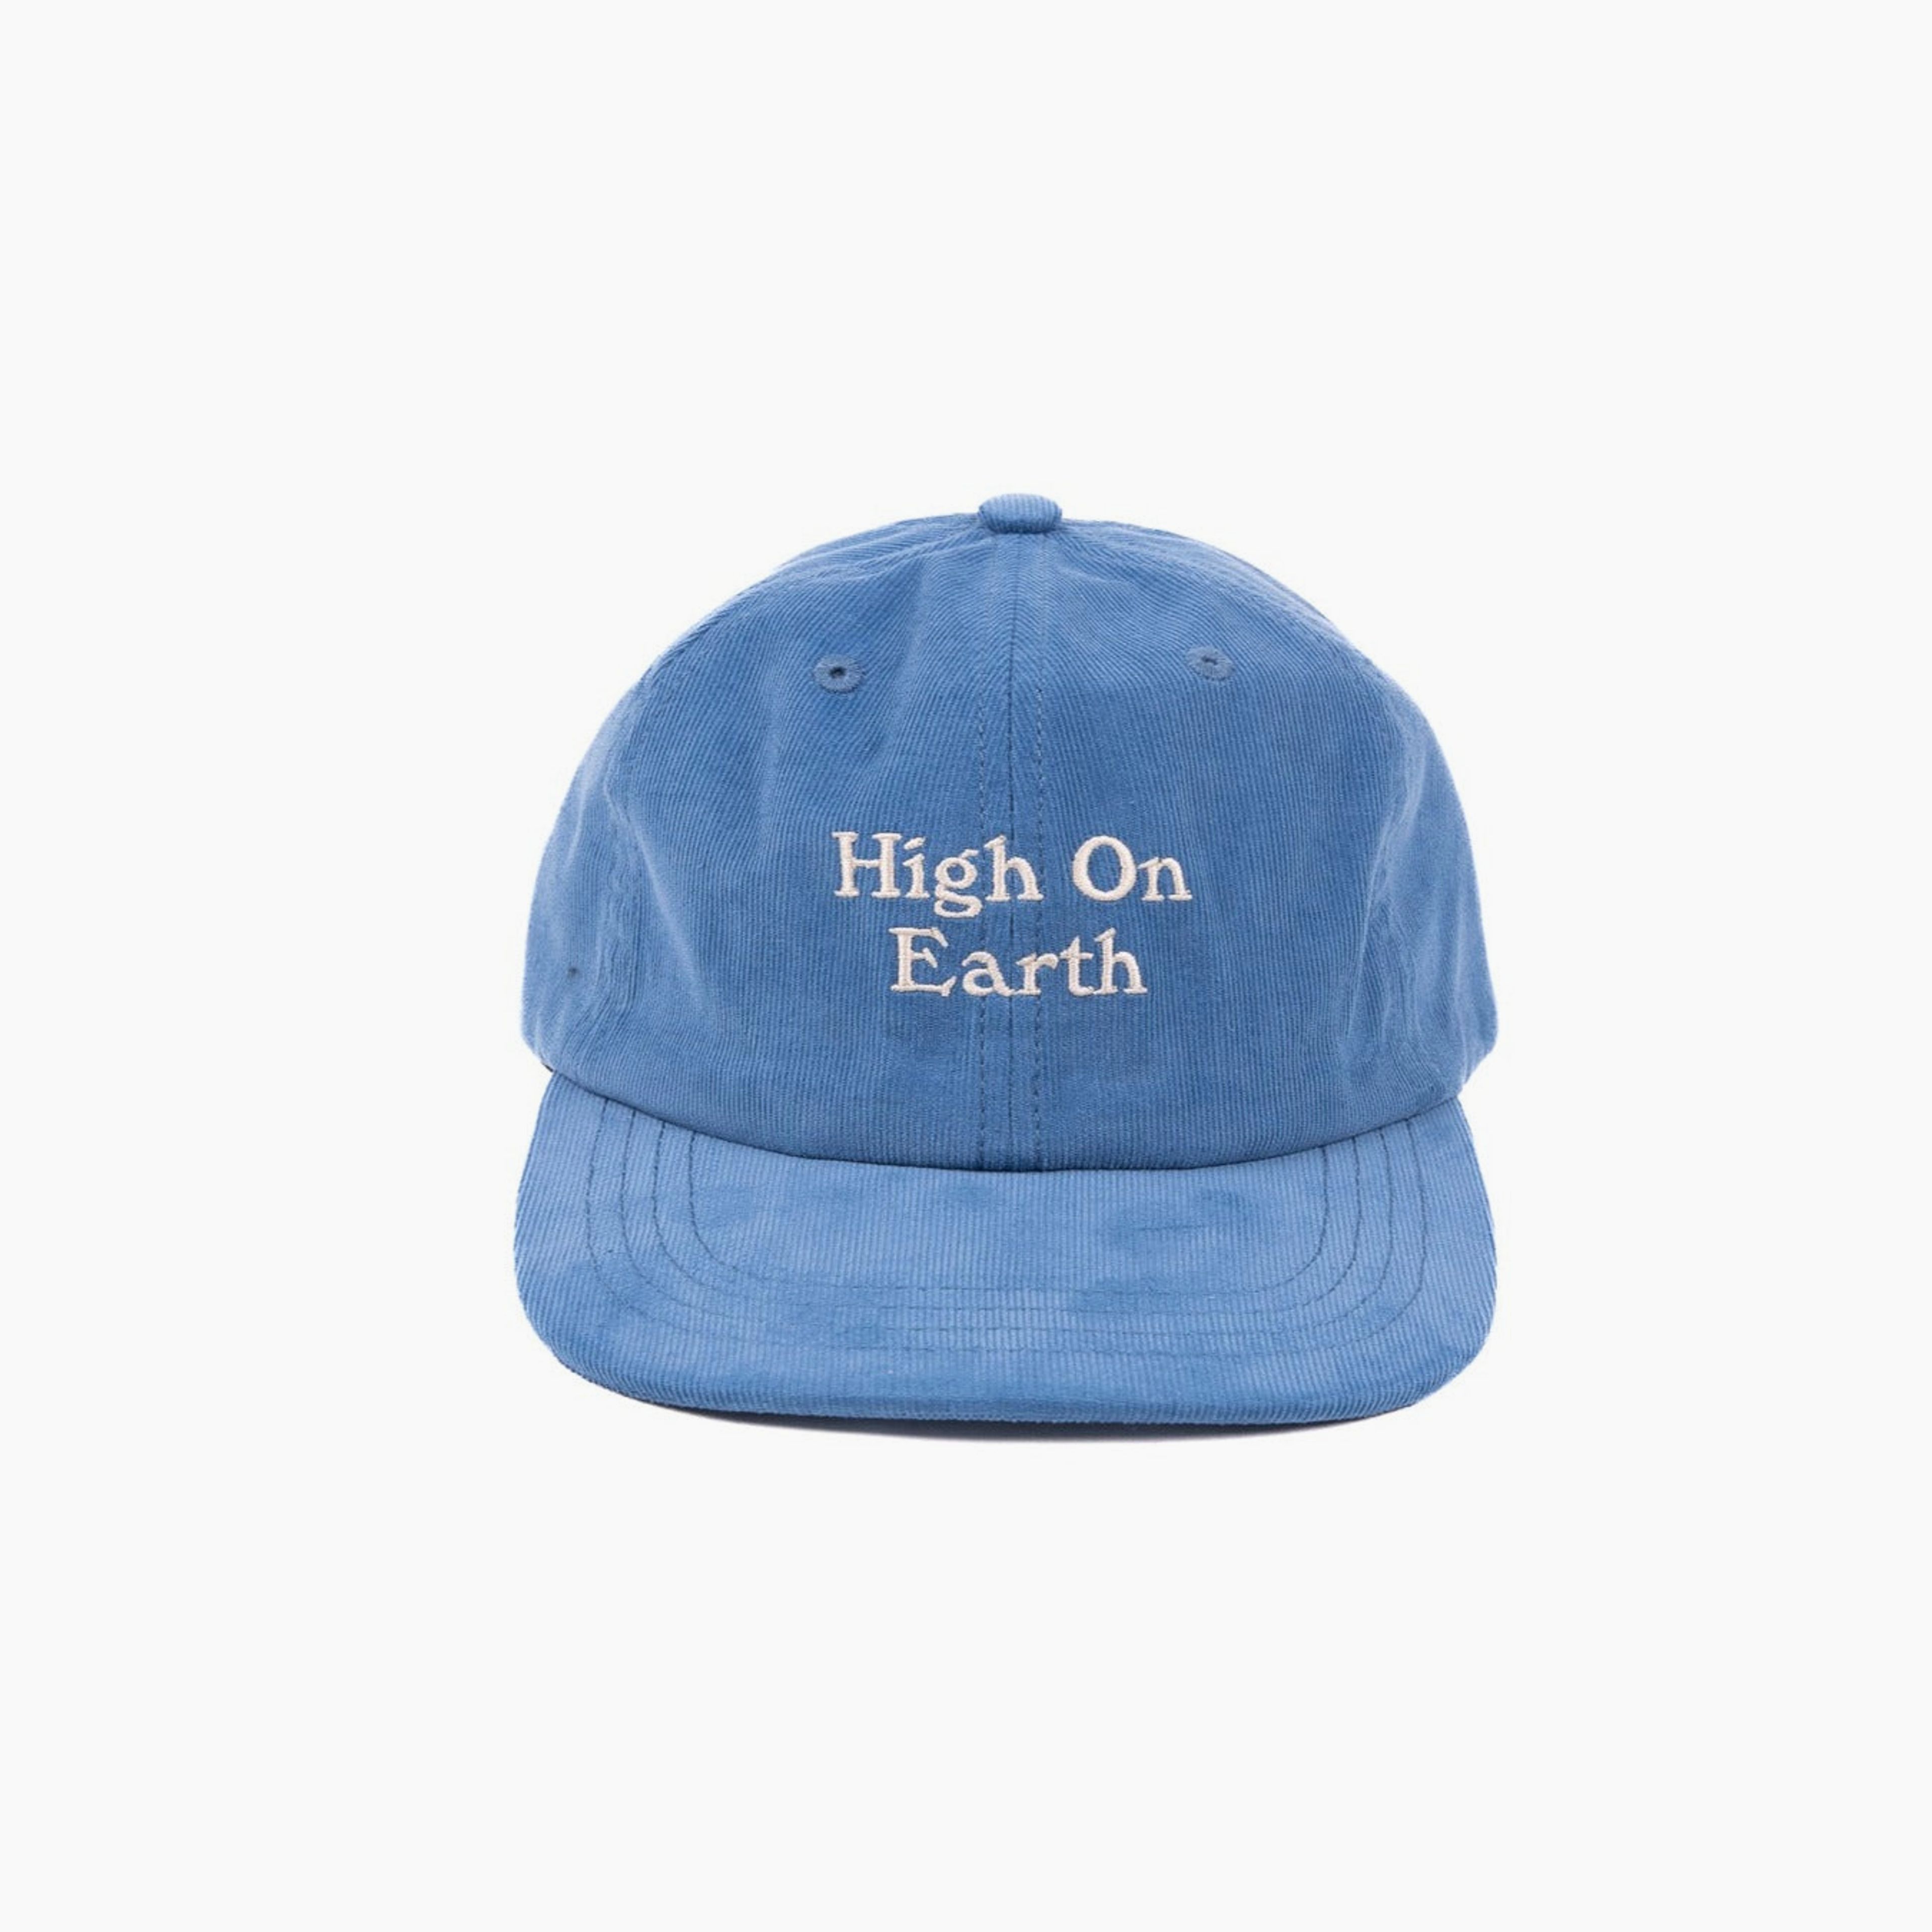 High On Earth hat - Blue Corduroy